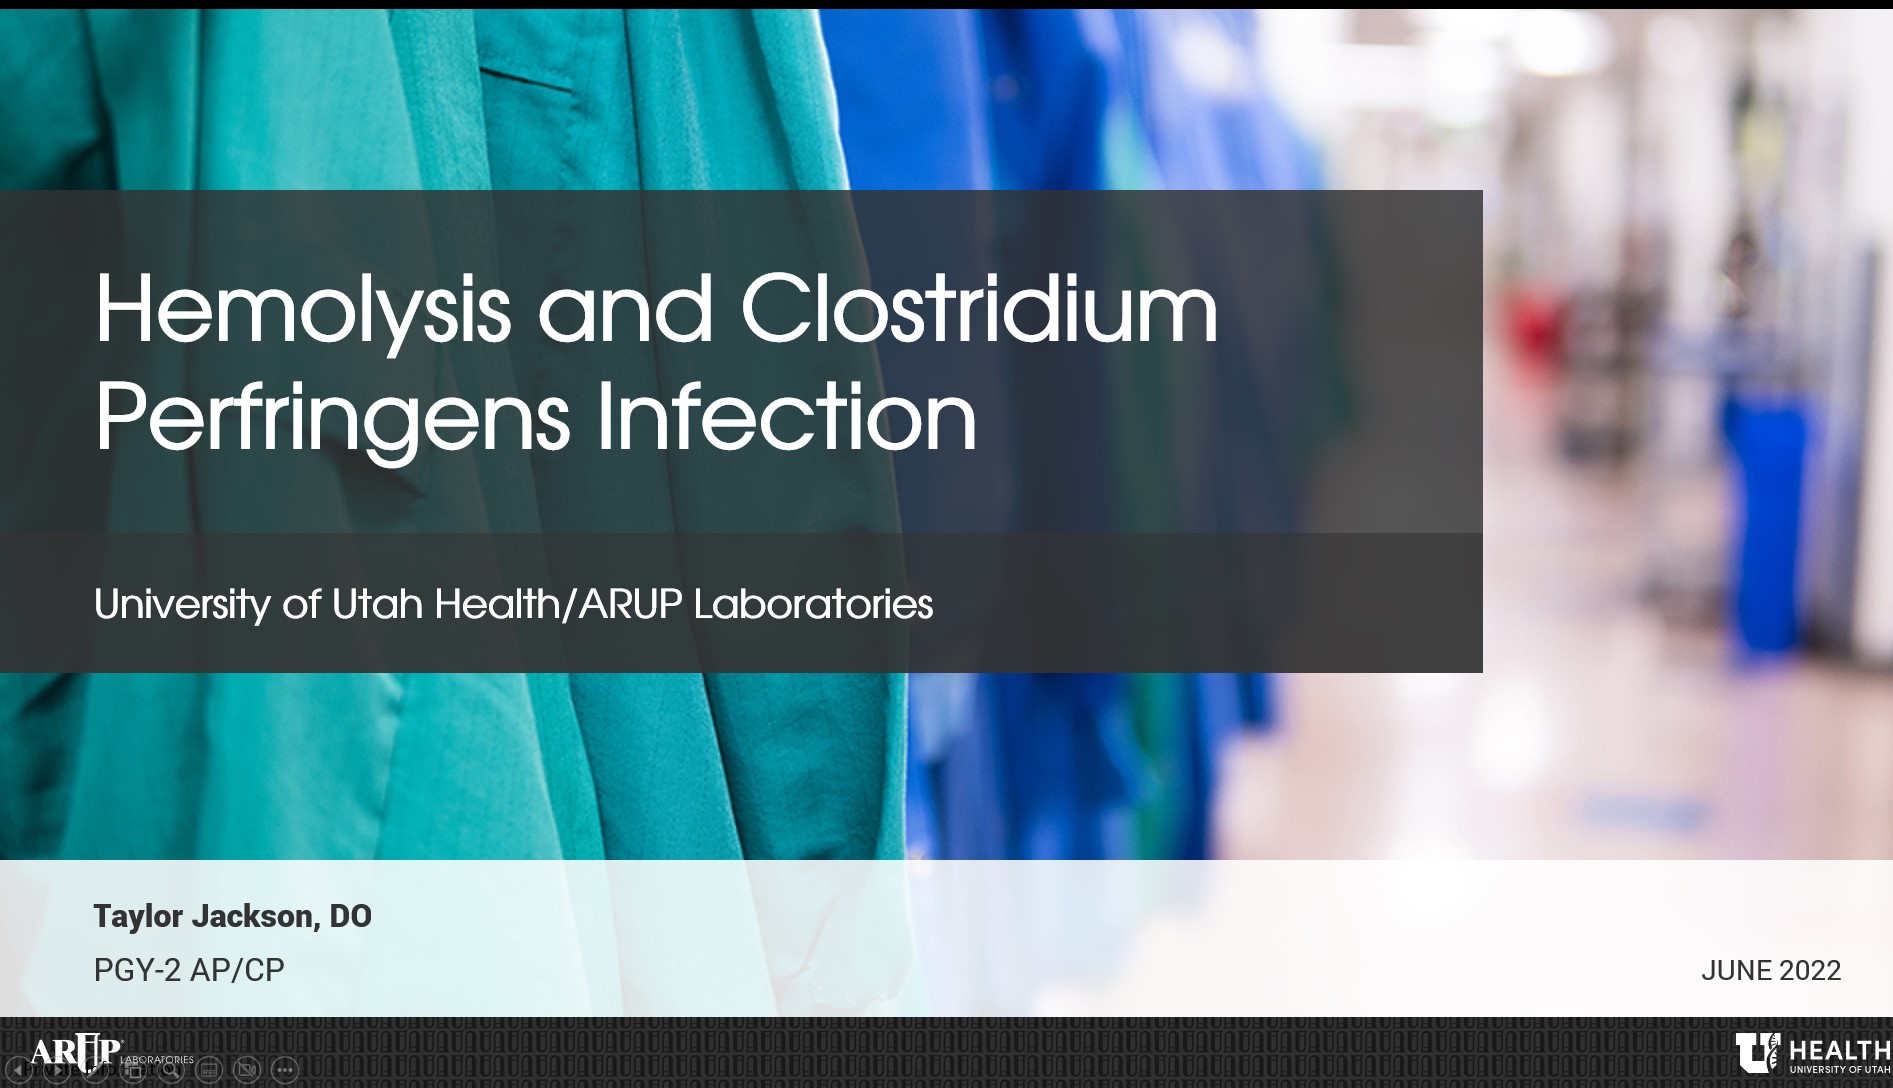 Hemolysis and Clostridium Perfringens Infection